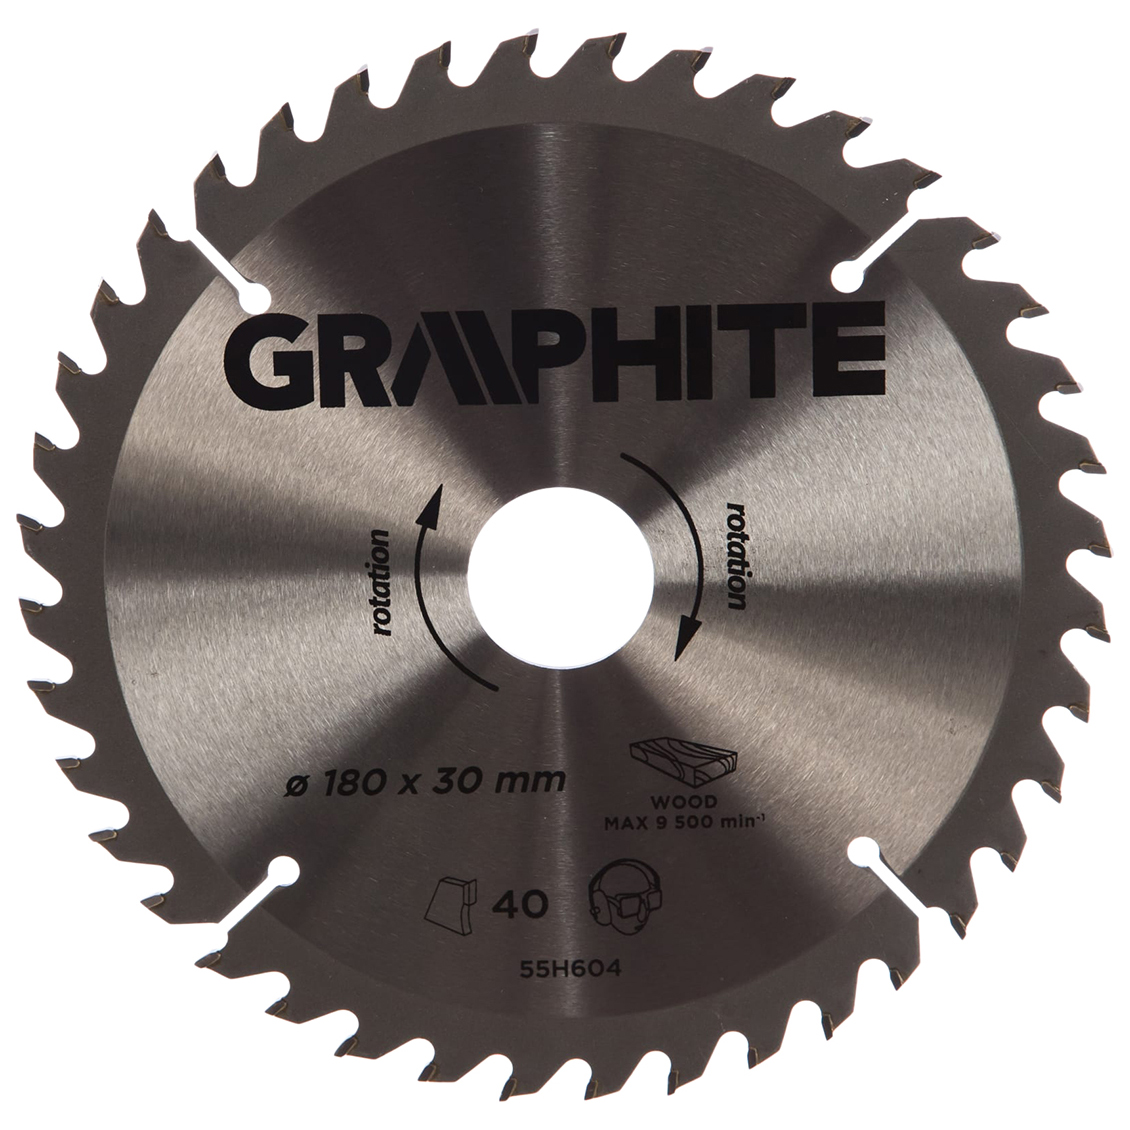 фото Graphite диск отрезной 180x30 мм, 40 зубьев 55h604